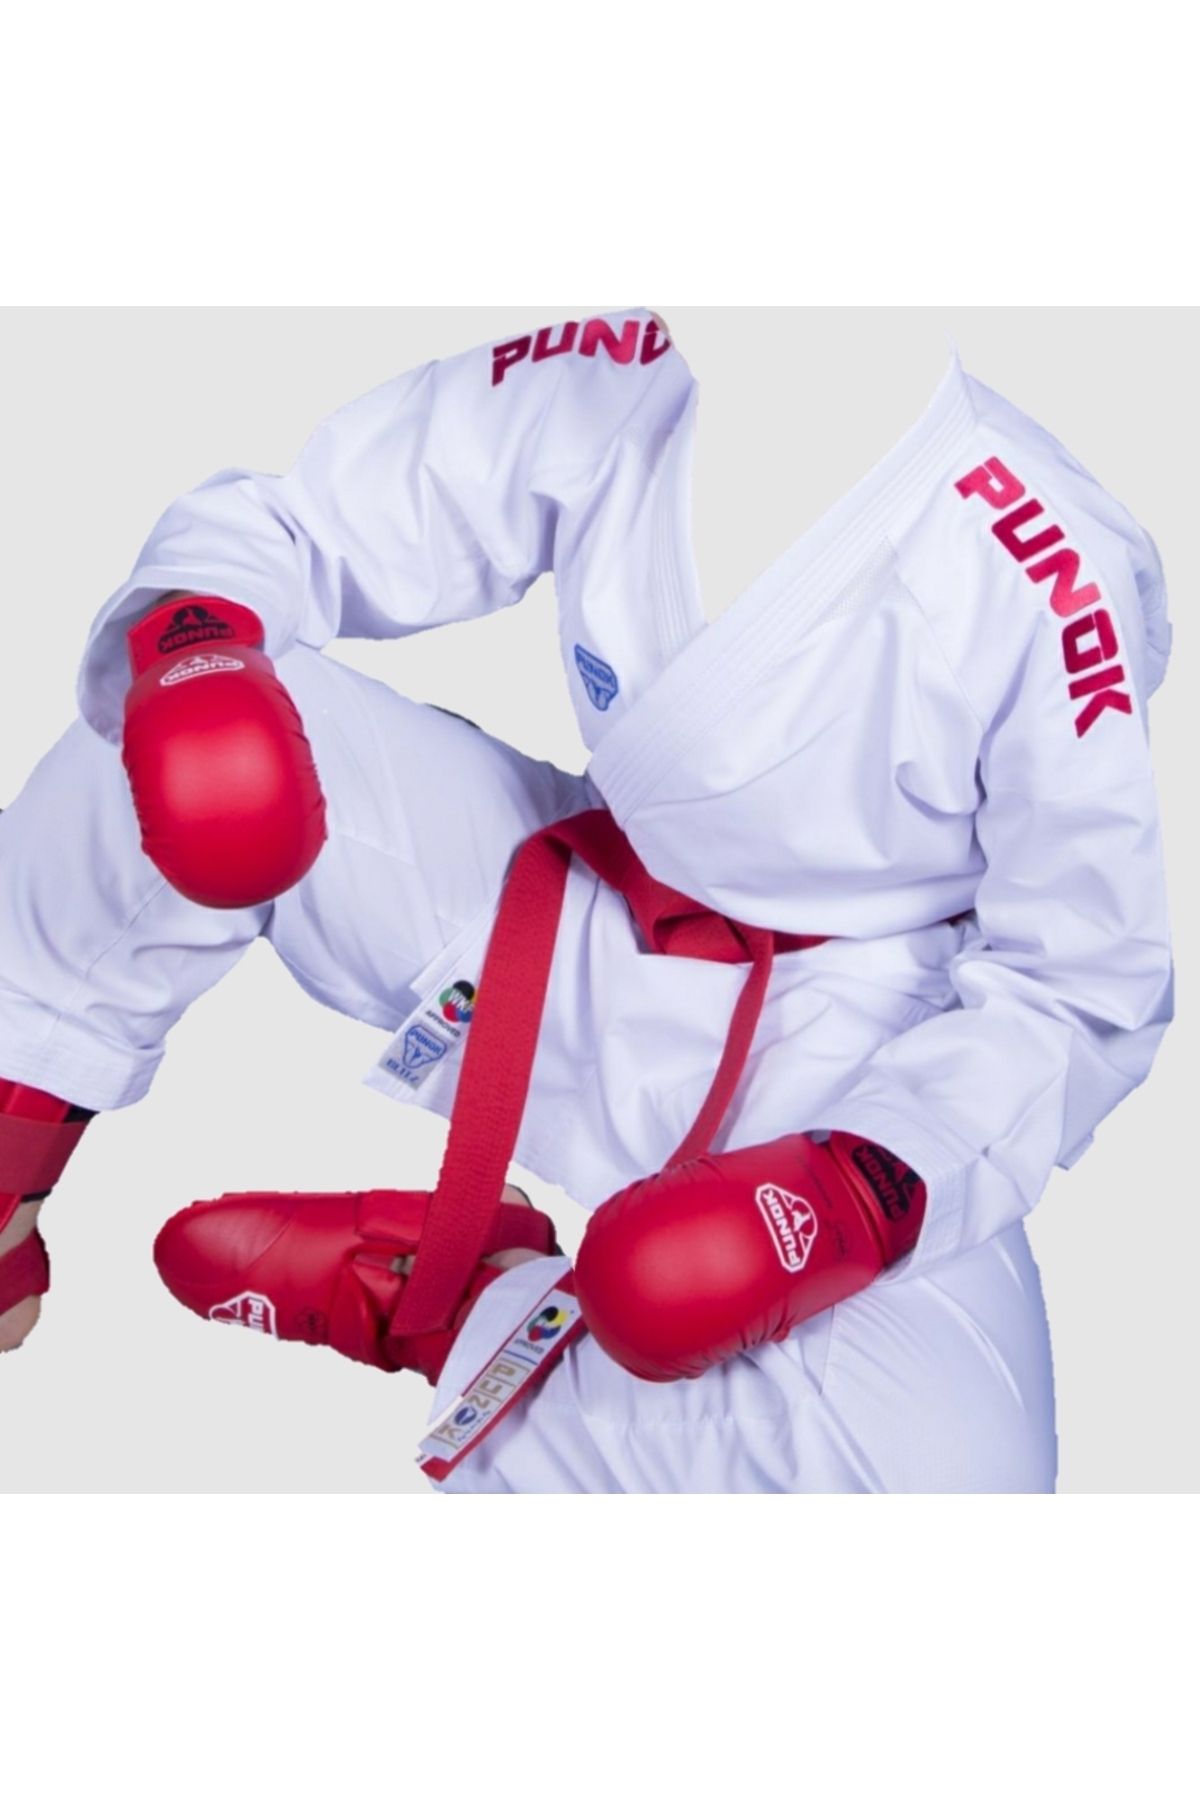 PUNOK Karate Eldiveni WKF Onaylı